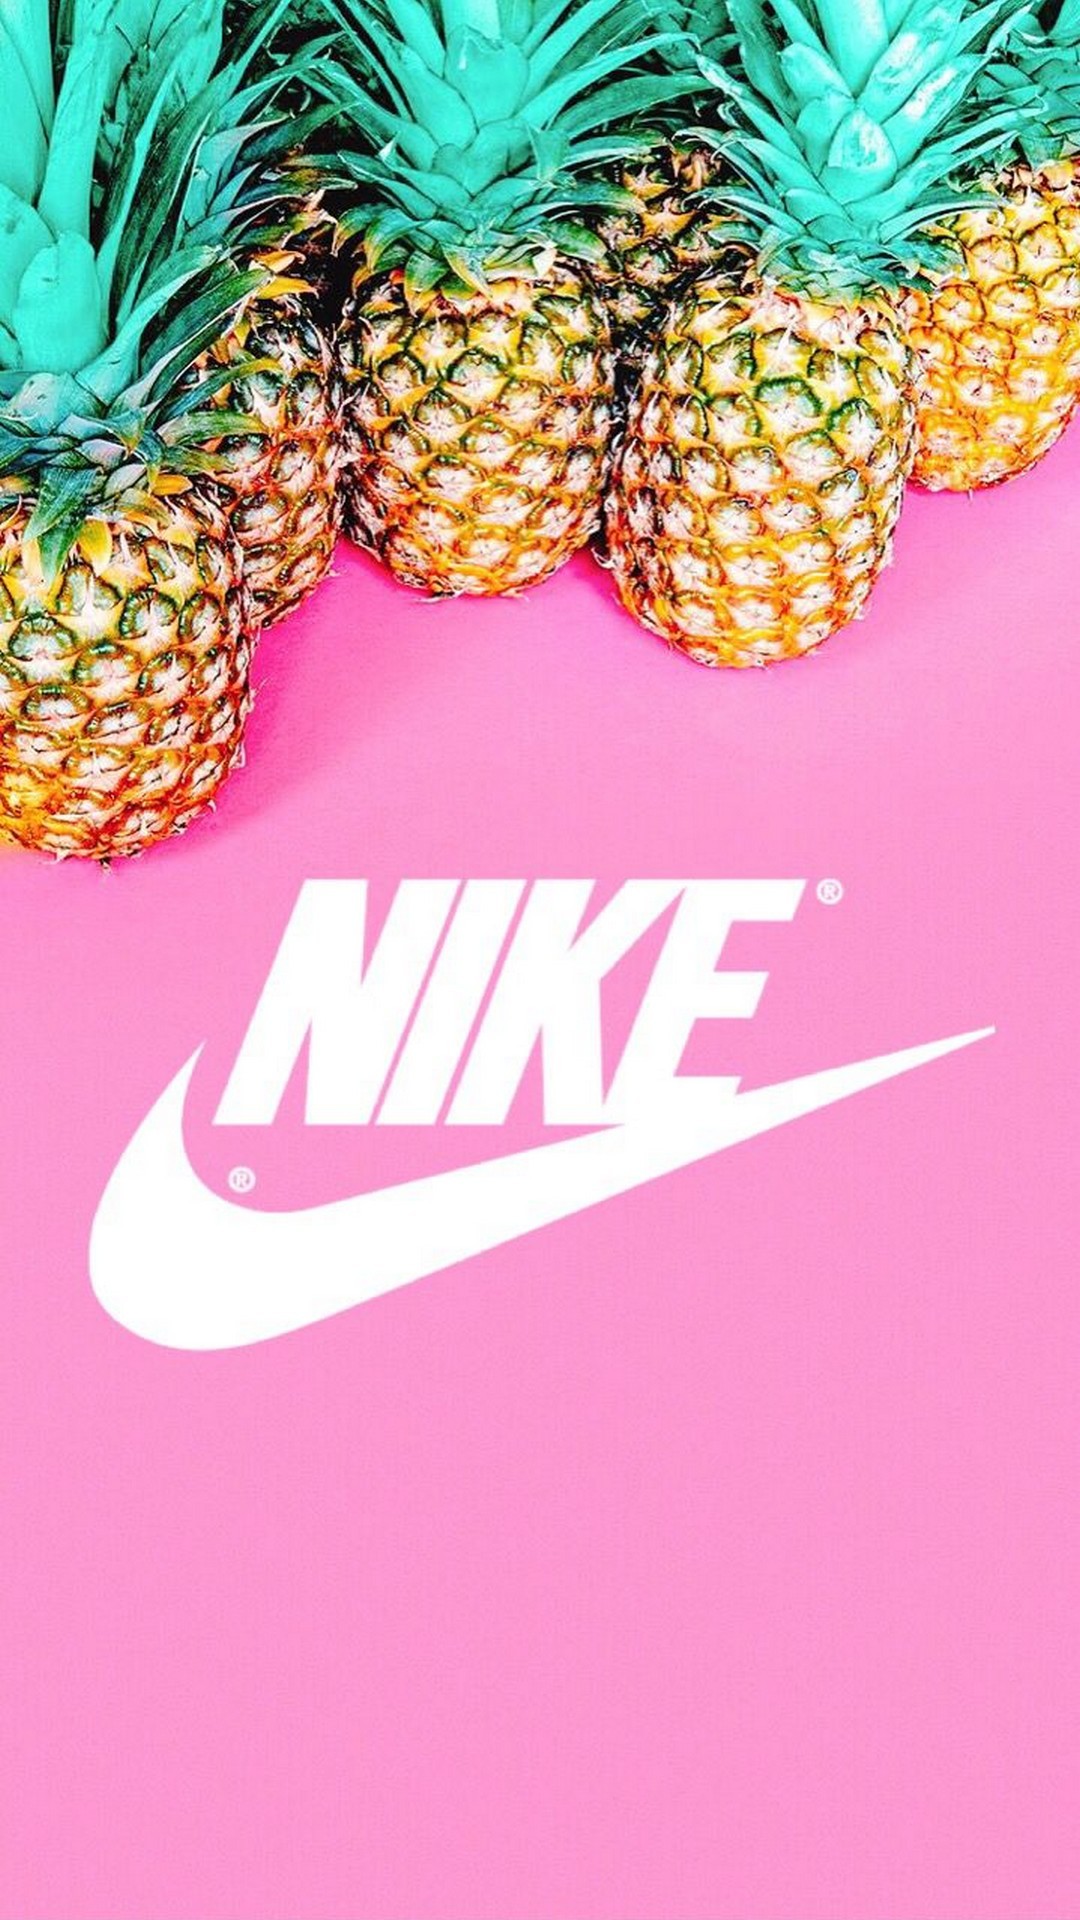 1080x1920 Nike Pineapple Pink Background